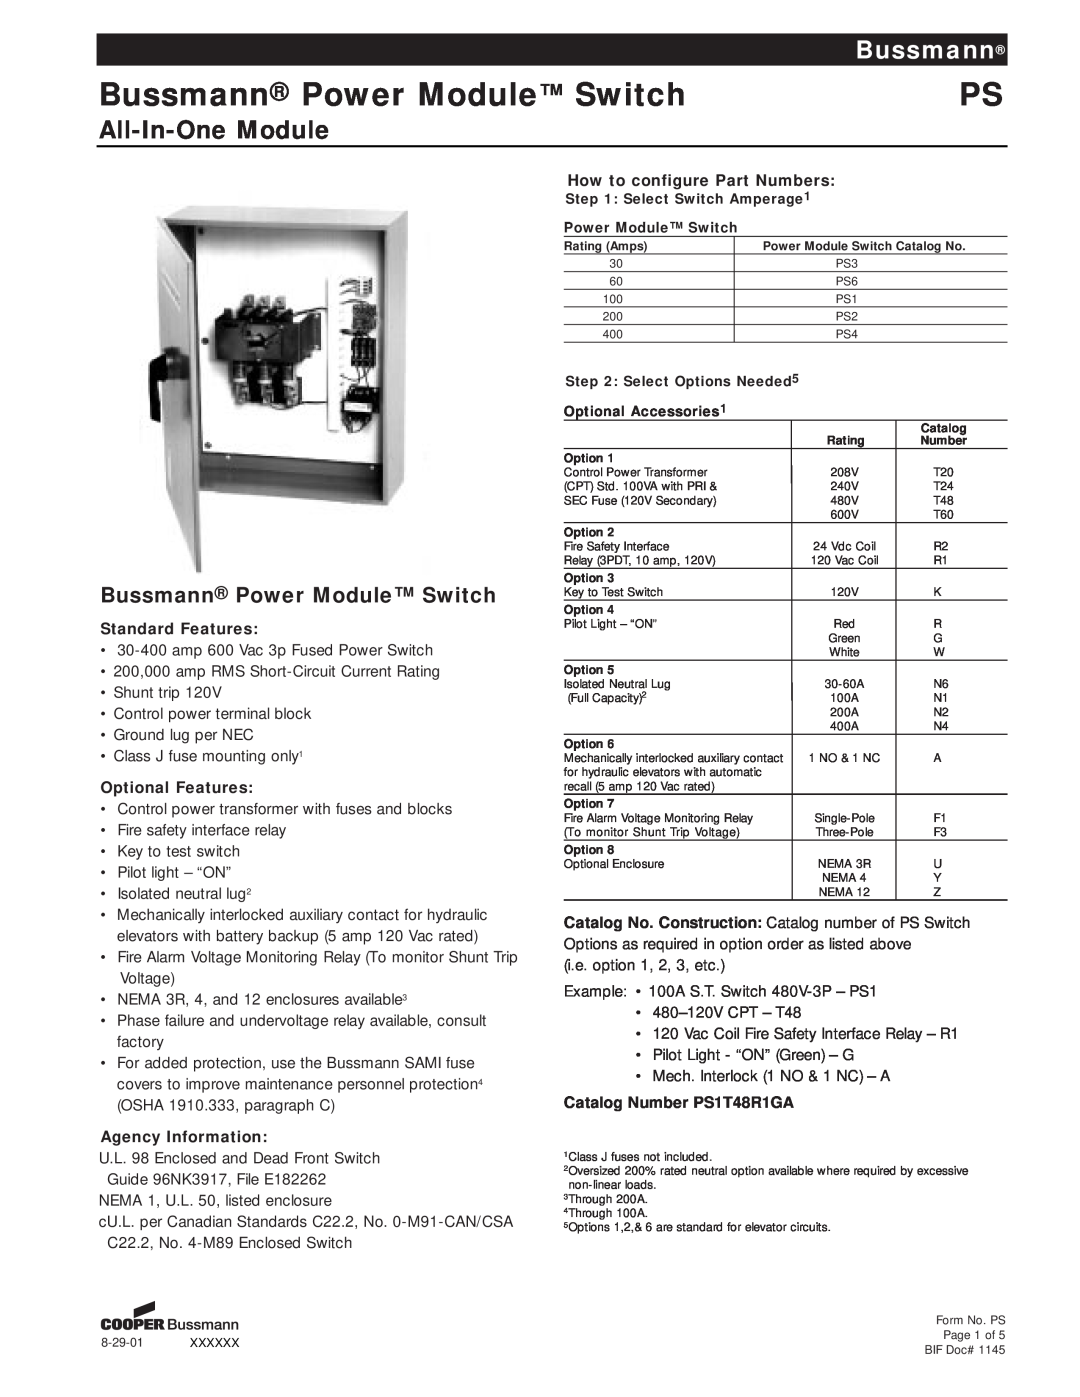 Cooper Bussmann PS manual Bussmann Power Module Switch, All-In-OneModule 